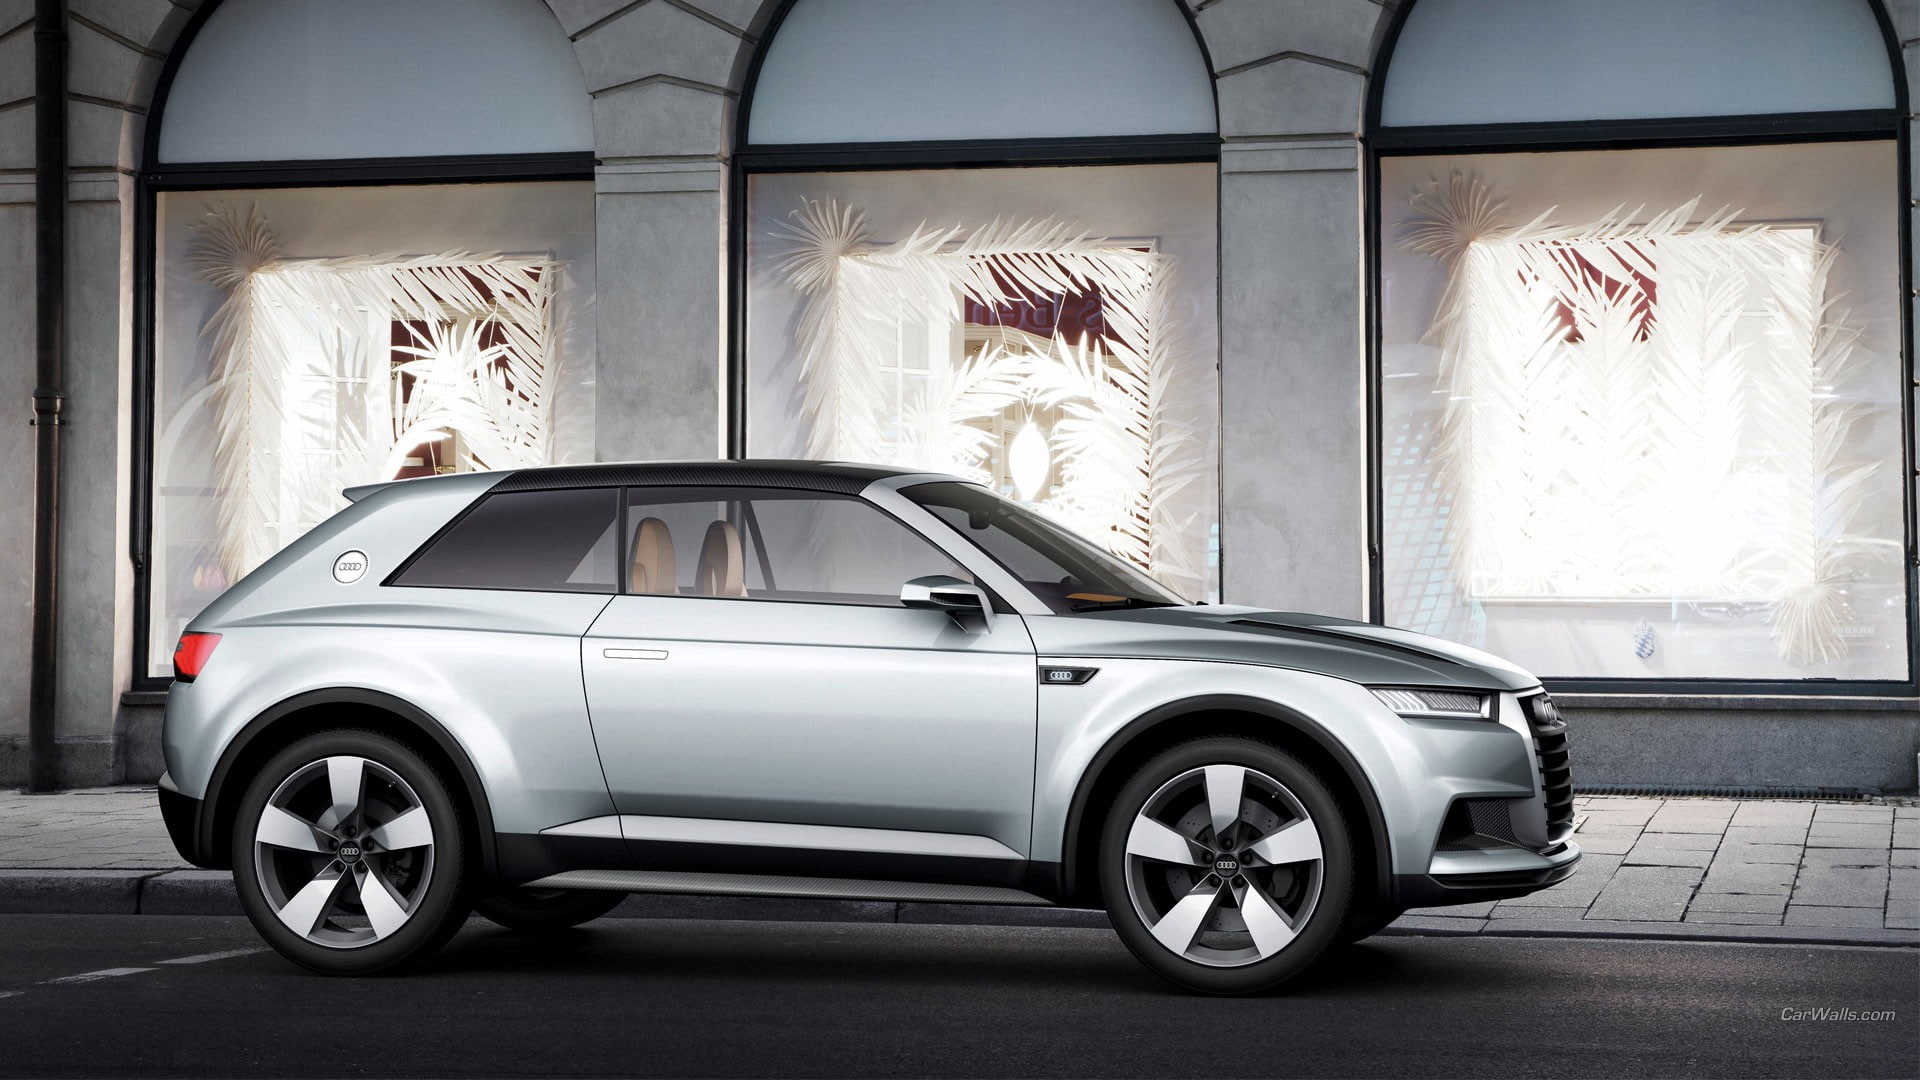 Audi Crossline, silver cars, vehicle, transportation, motor vehicle